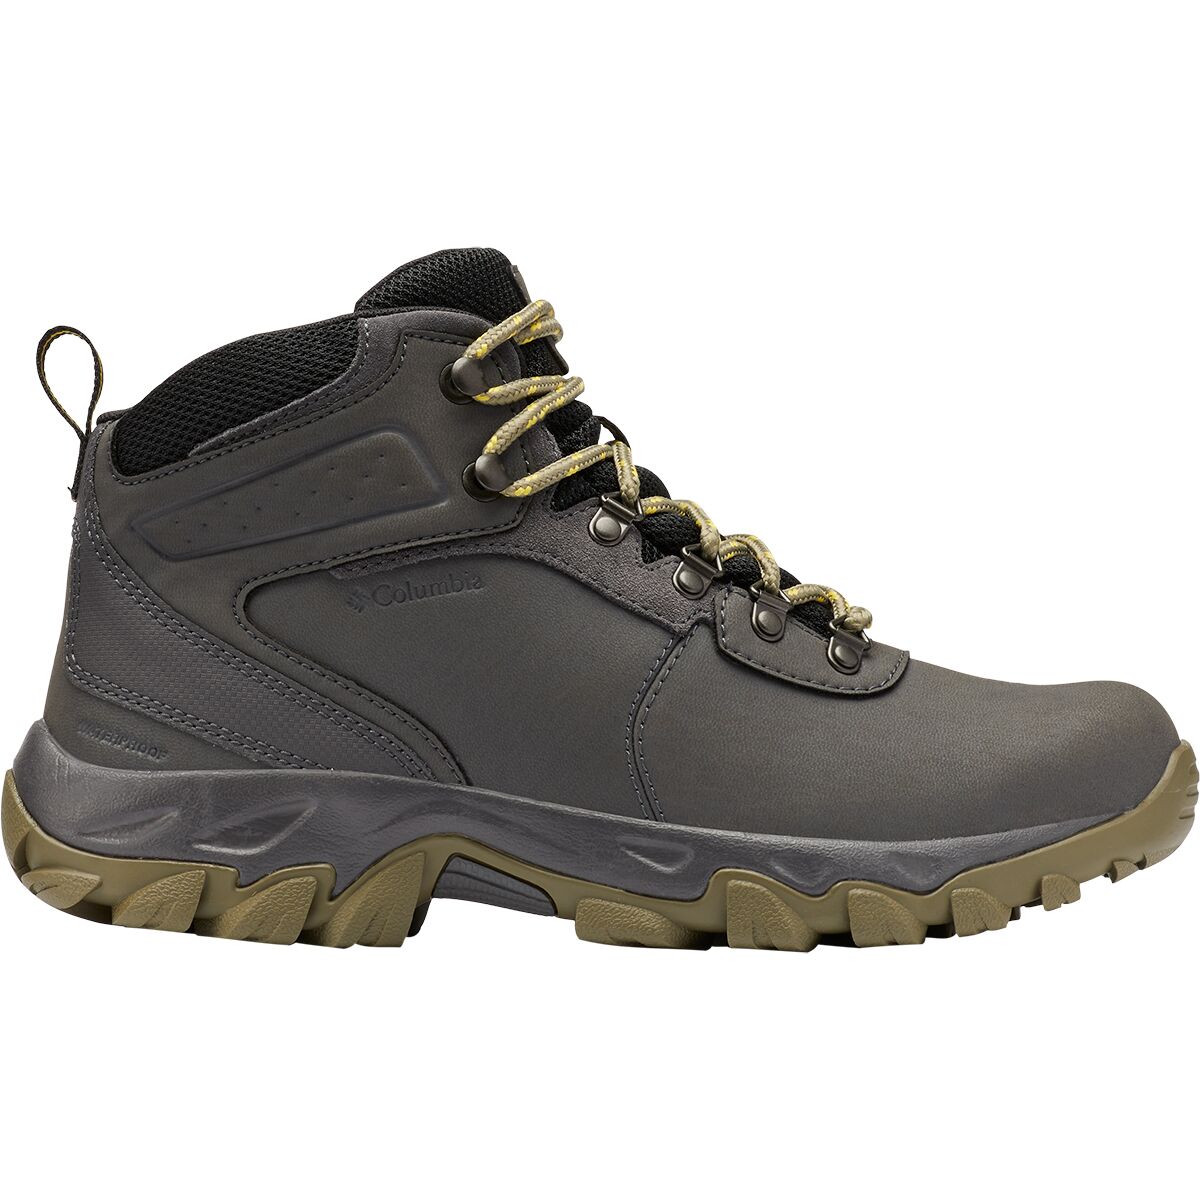 Newton Ridge Plus II Waterproof Wide Hiking Boot - Men